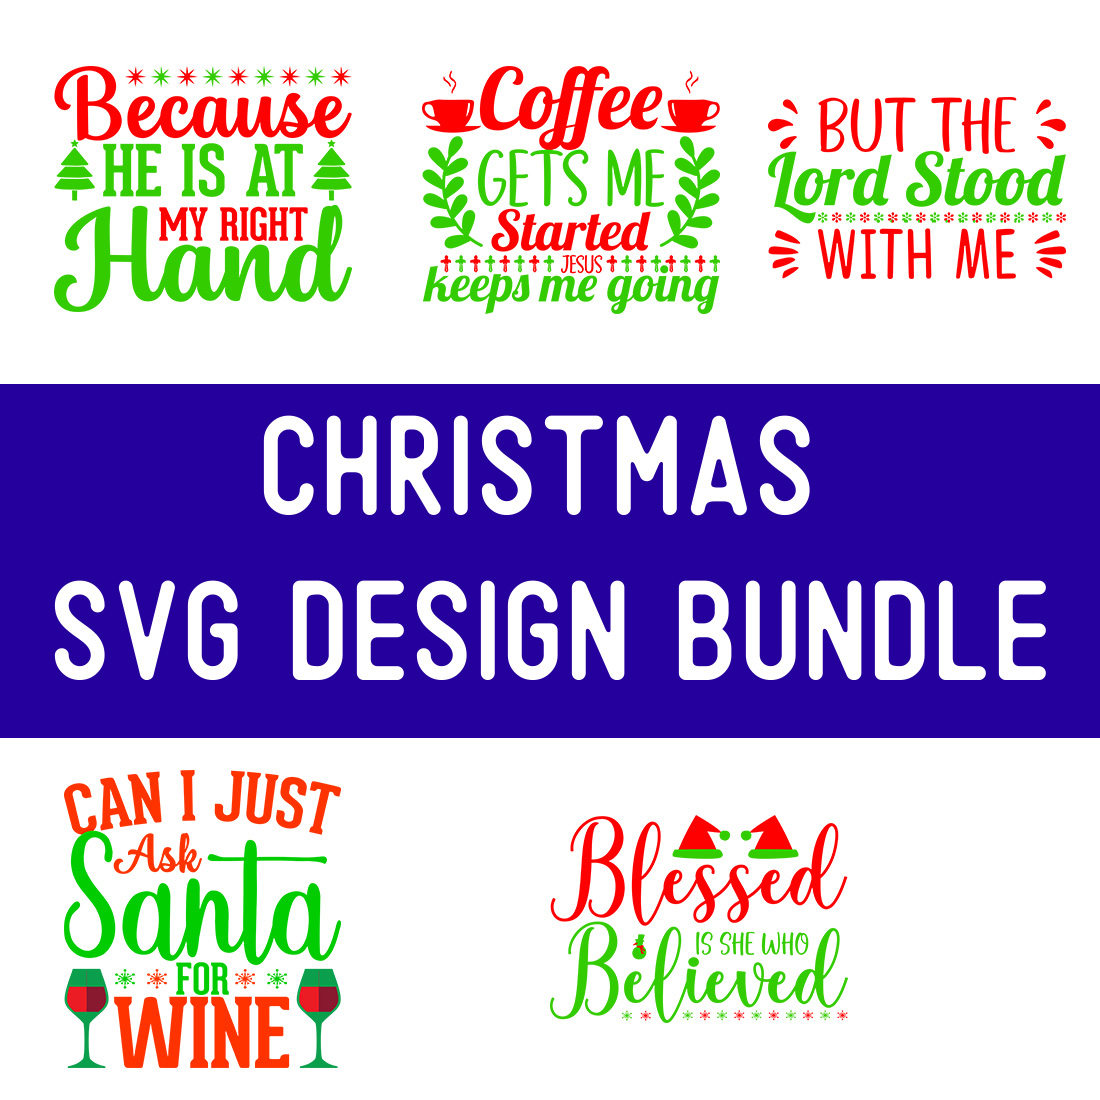 Christmas SVG Design Bundle cover image.